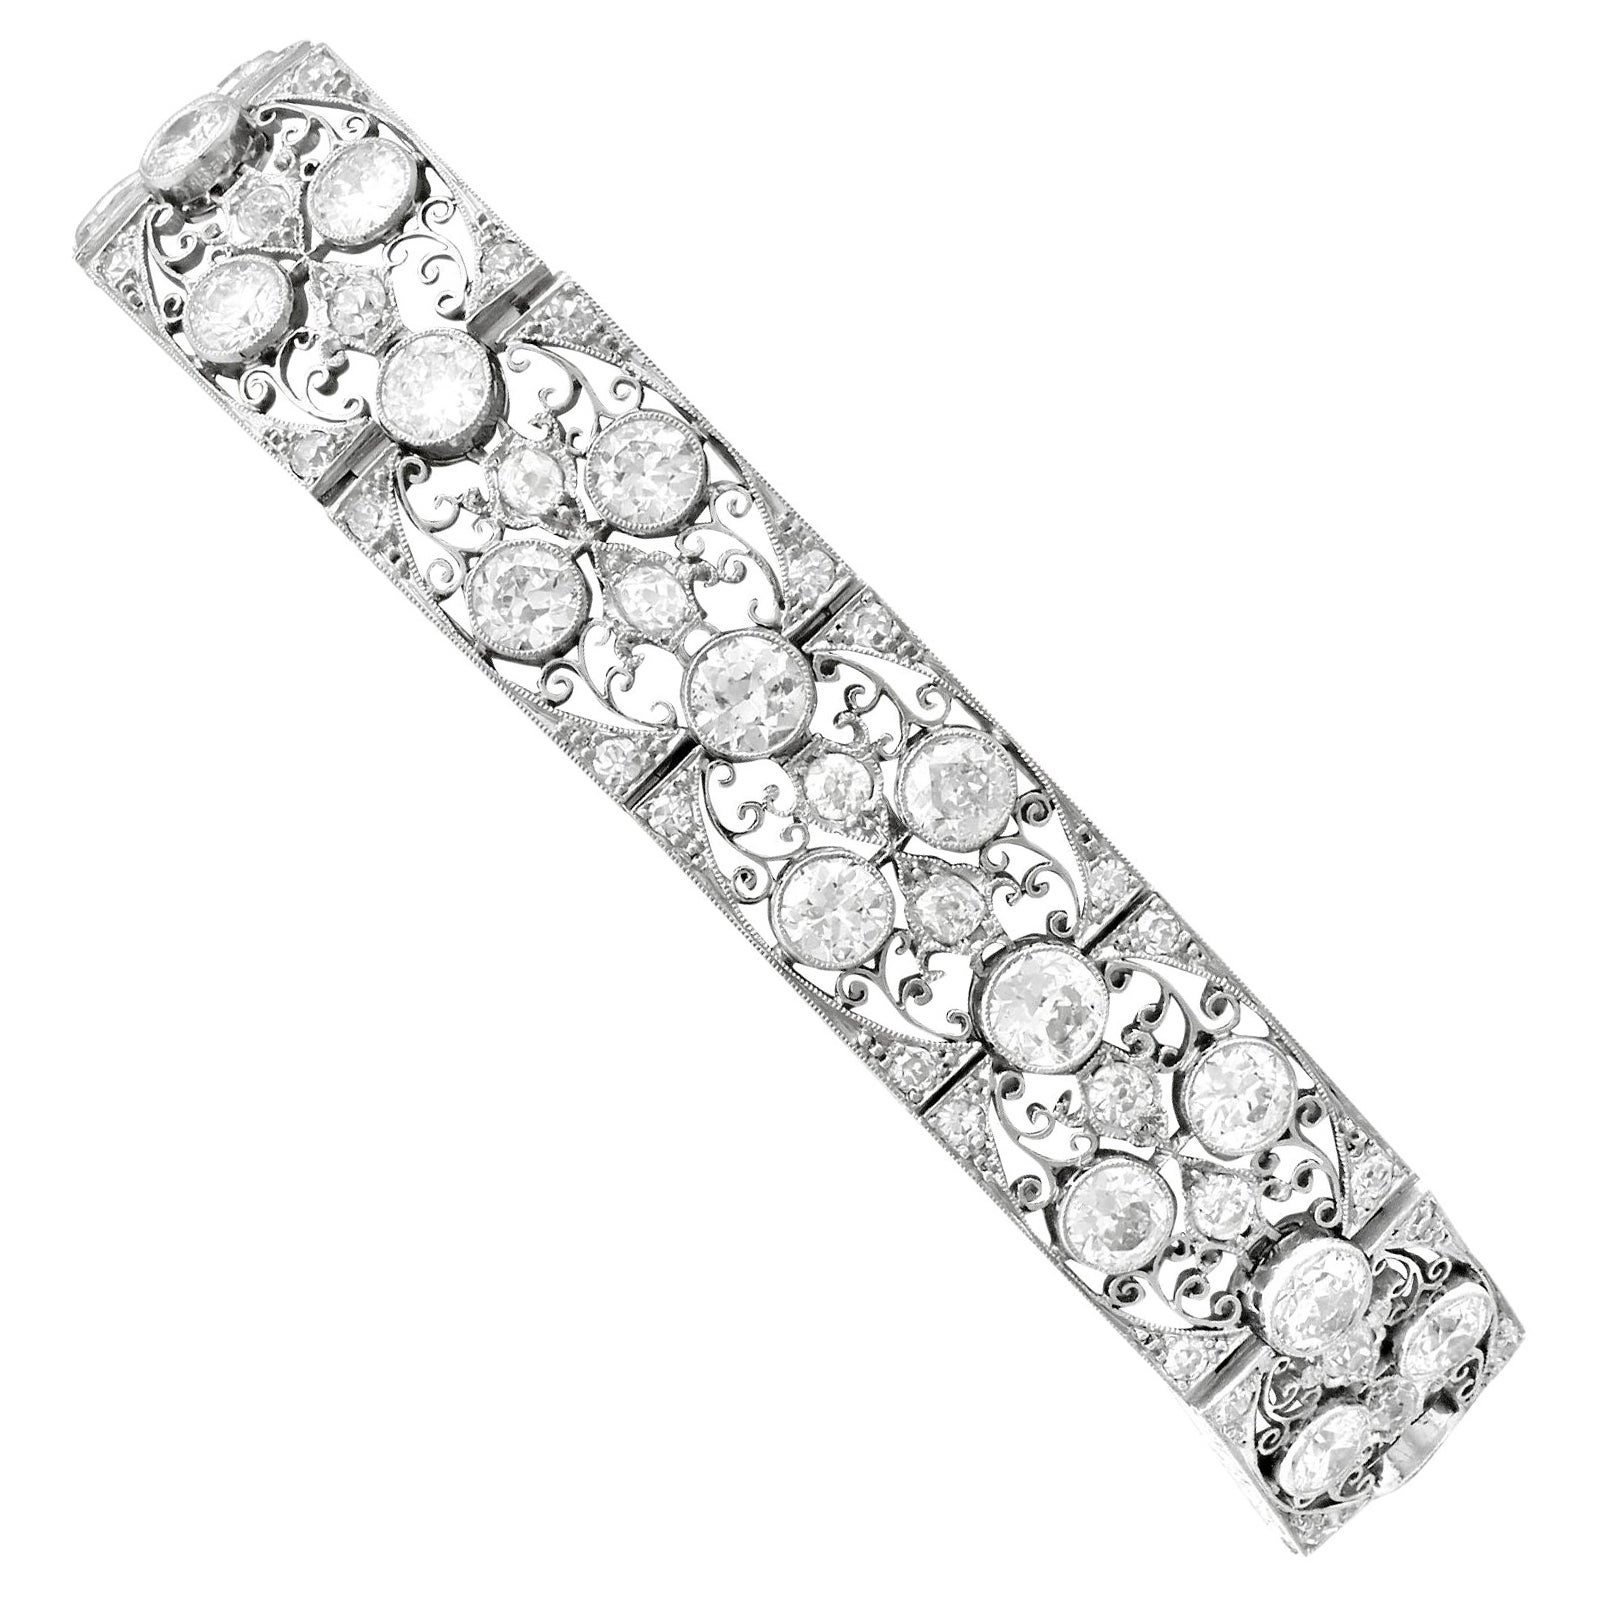 Antique 1920s French Import 15.80 Carat Diamond and Platinum Bracelet For Sale